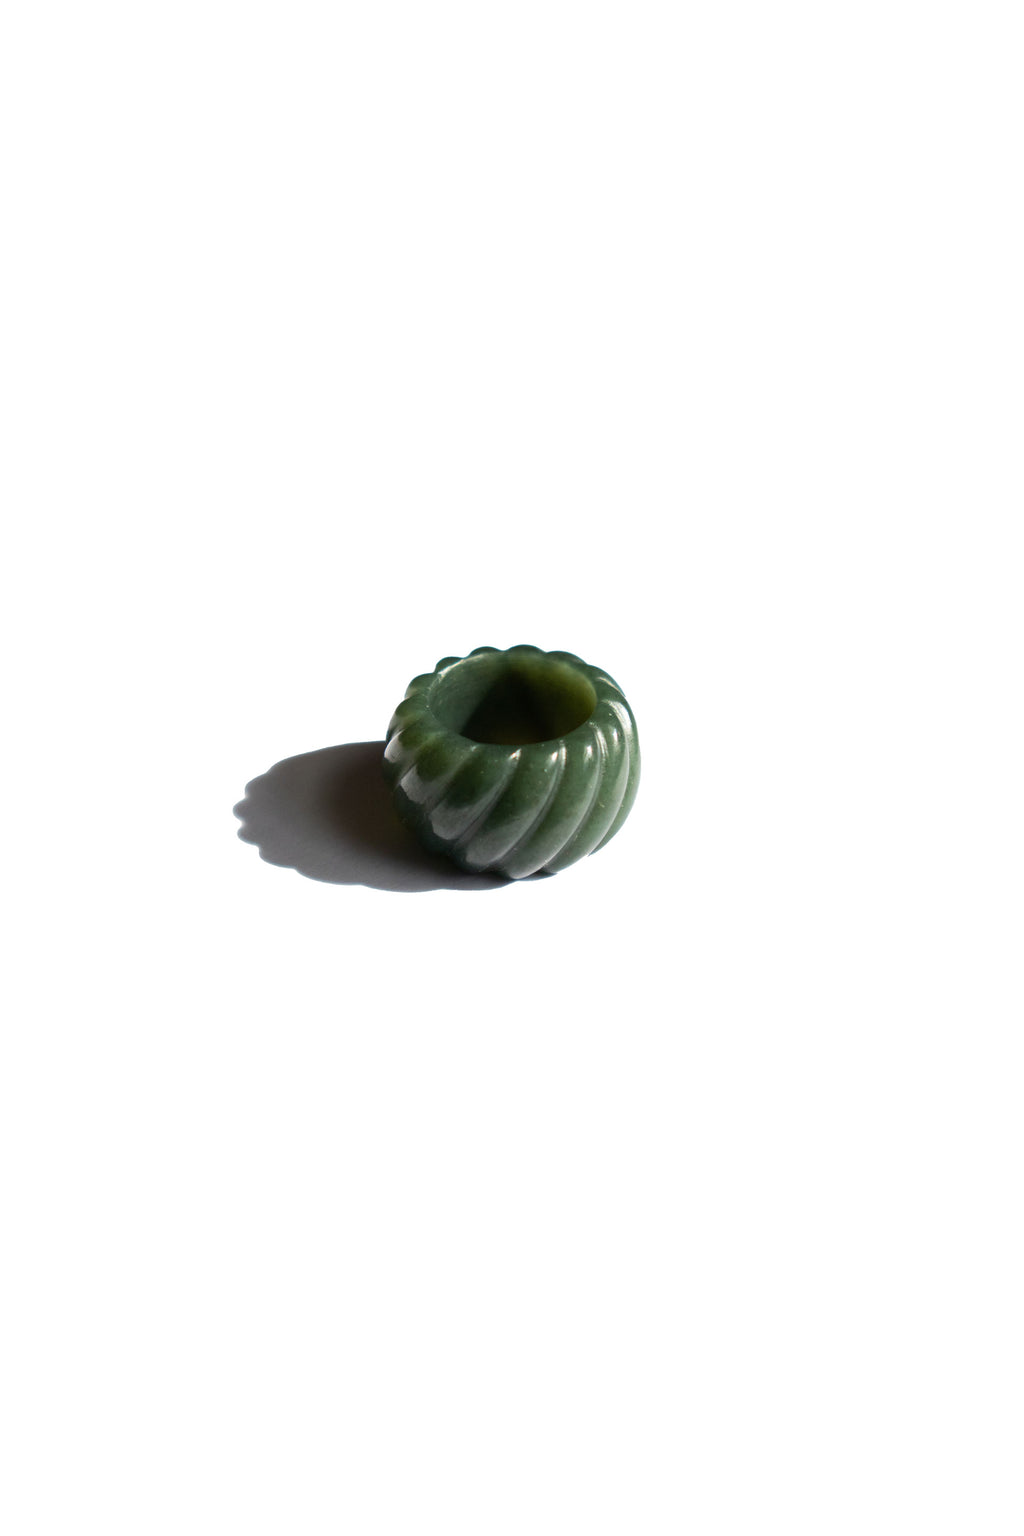 seree-croissant-chunky-ring-in-dark-green-nephrite-jade